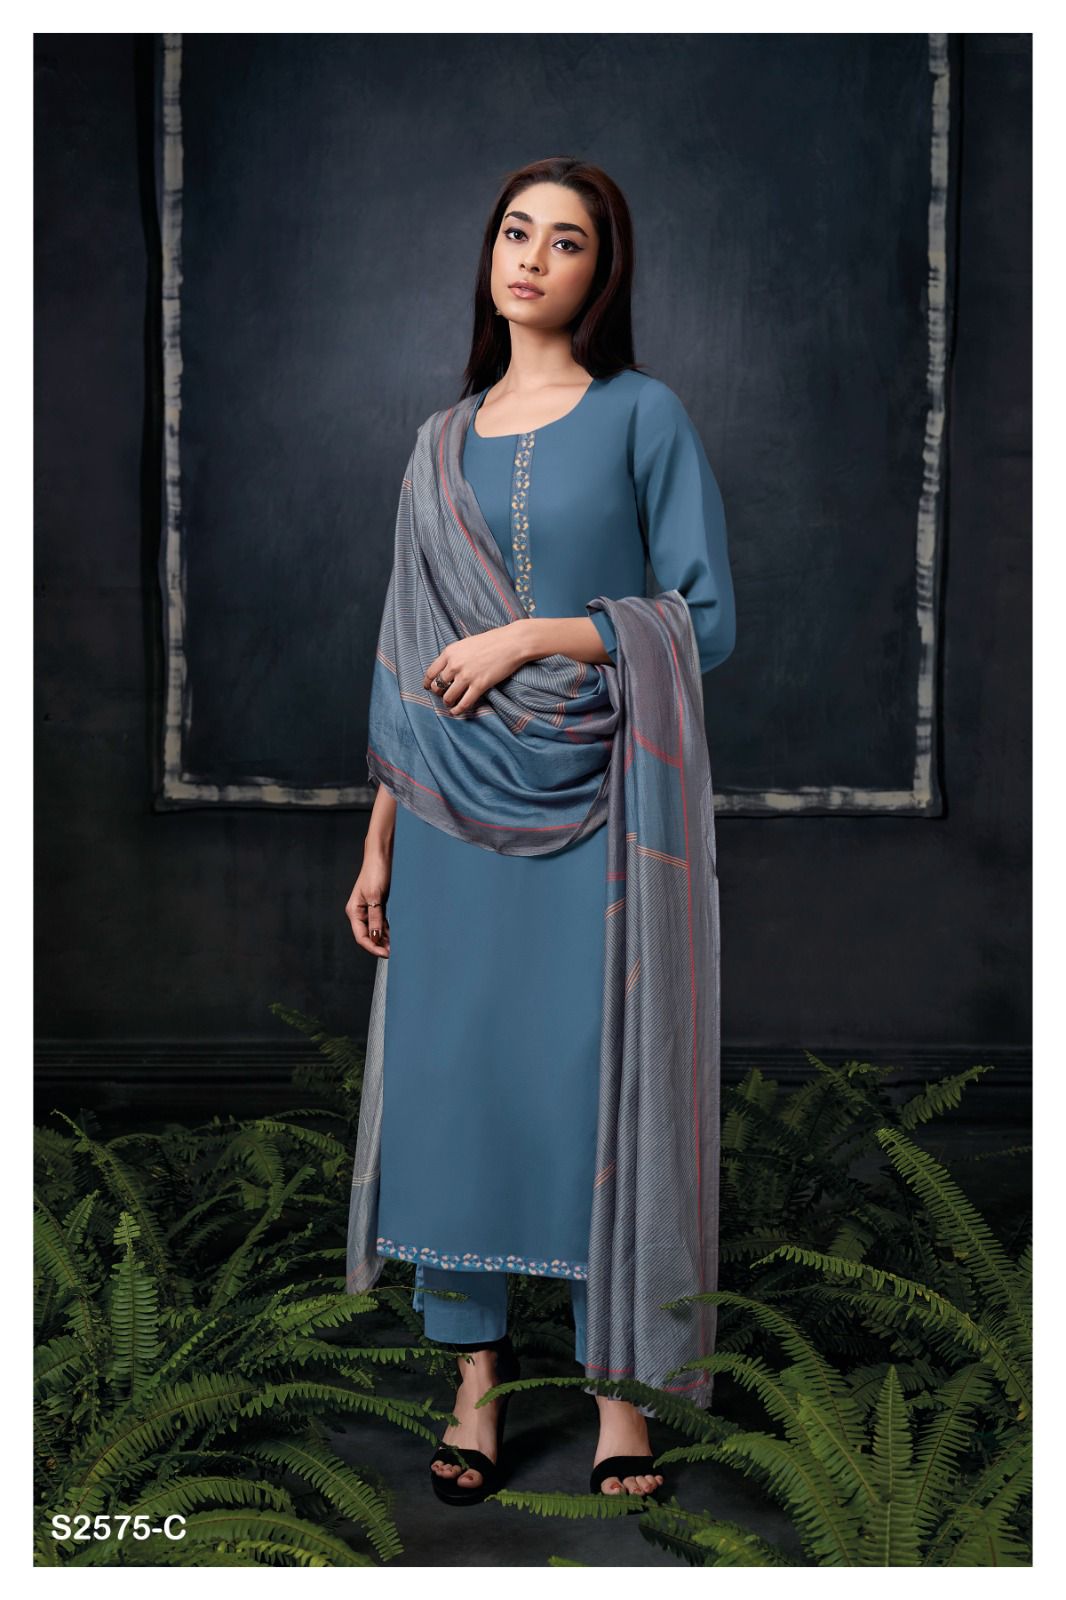 Bharvi 2575 Ganga Cotton Silk Plazzo Style Suits Wholesale